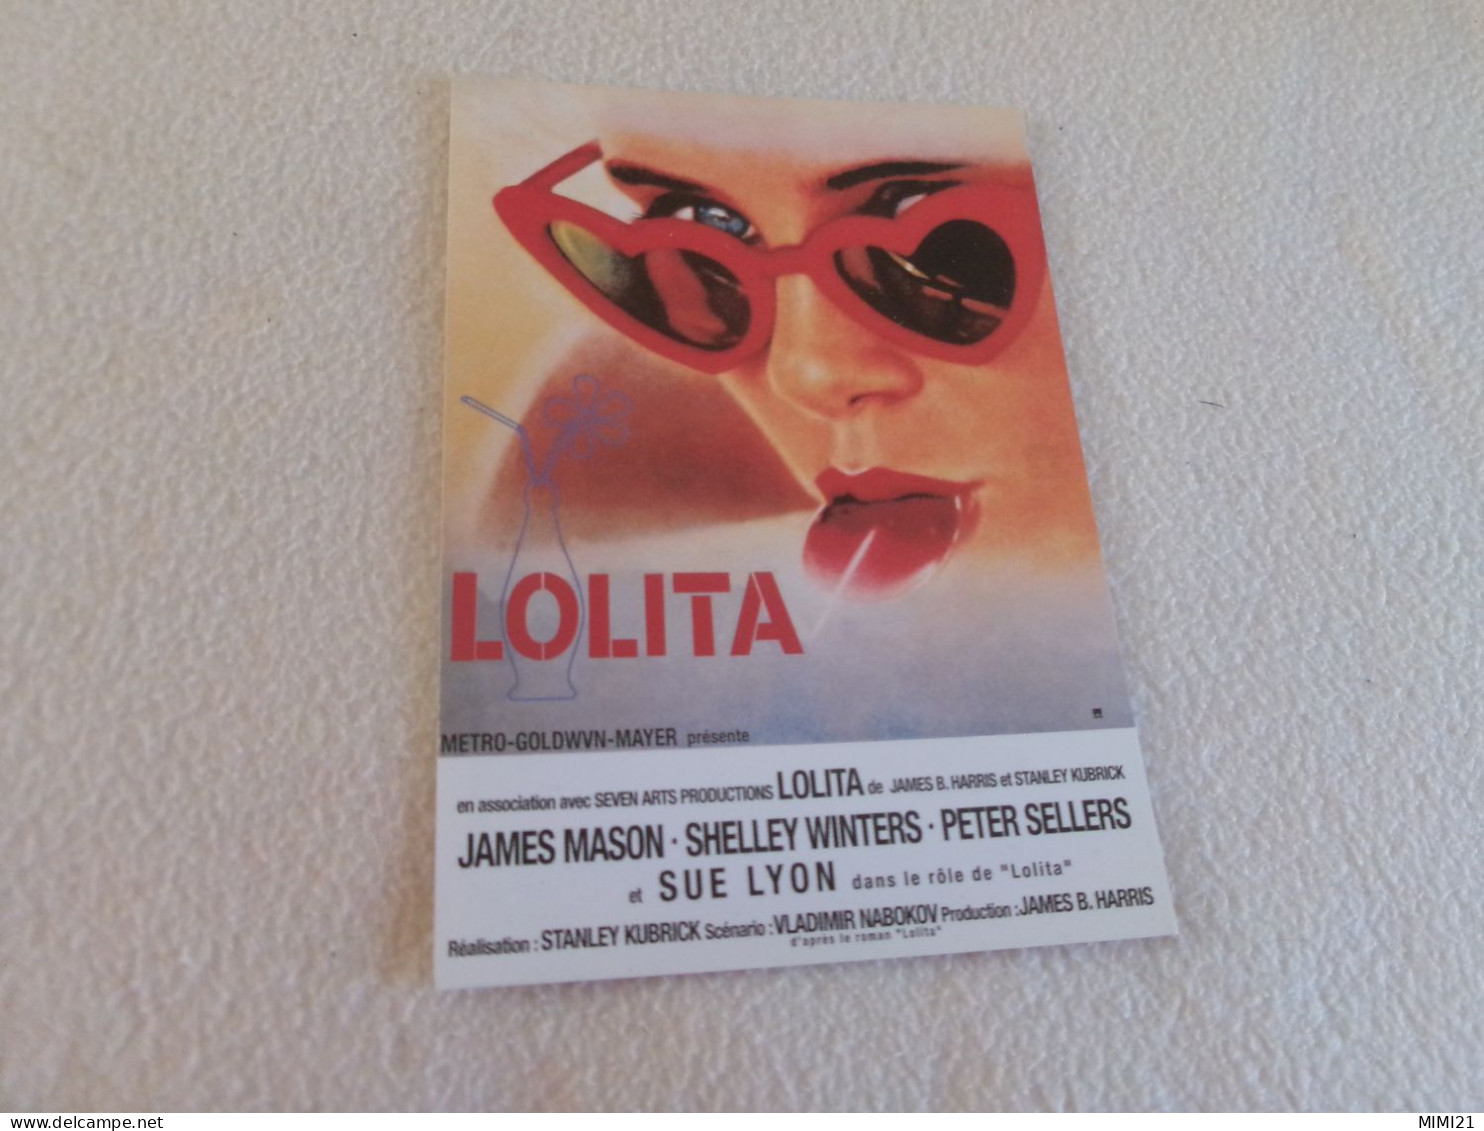 BELLE CARTE AFFICHE DE FILM "LOLITA" DE S. KUBRICK (vente 1.60) - Posters On Cards